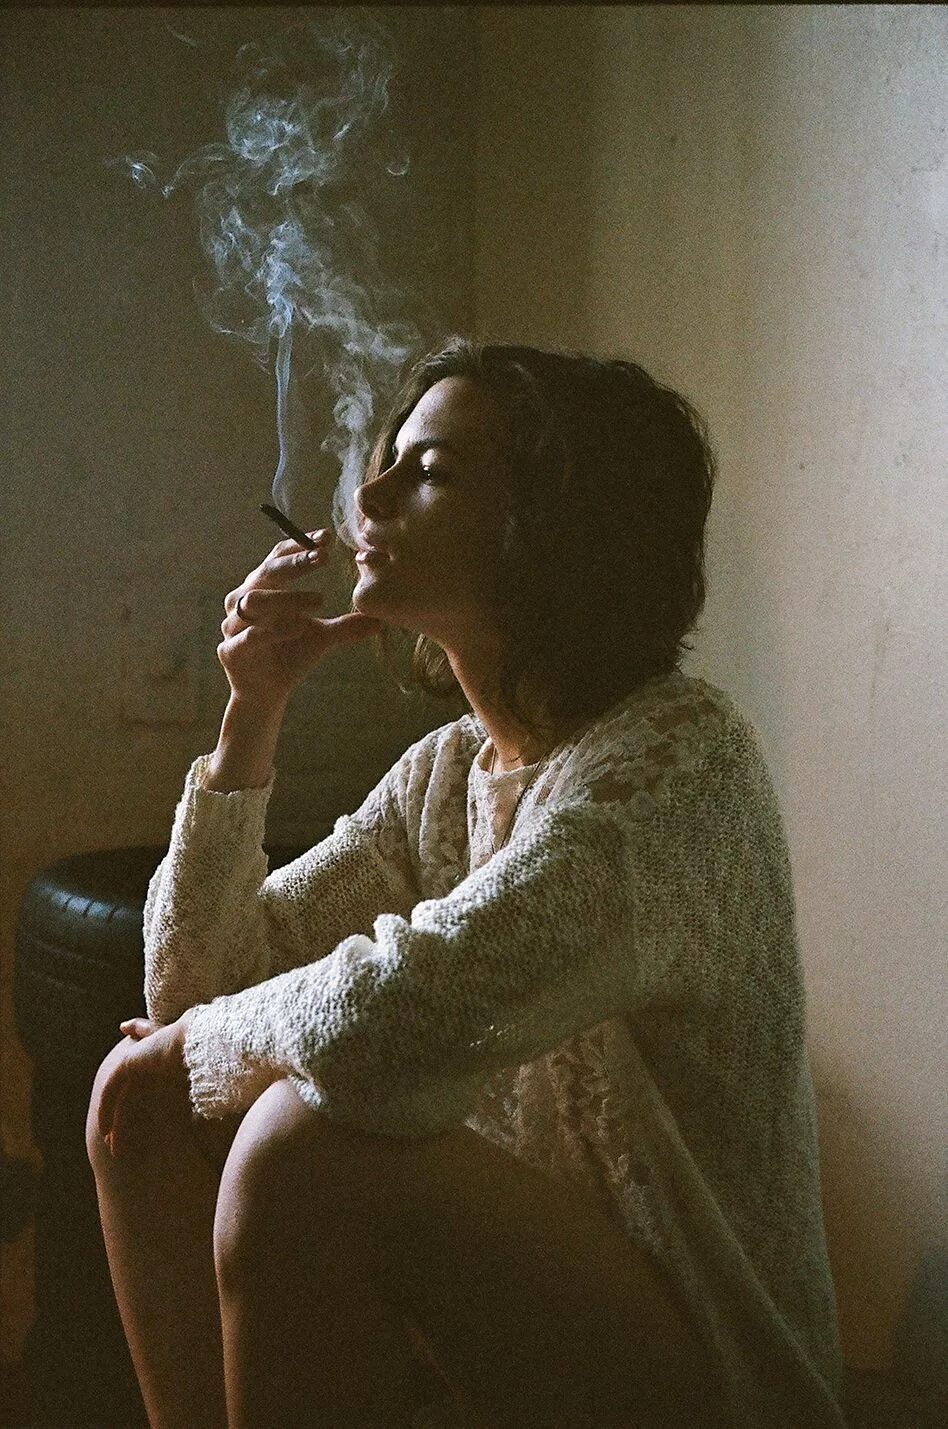 Lost курилка. Курящая девушка Эстетика. Девочка с сигаретой. Эстетика курящих девушек. Человек с сигаретой Эстетика.